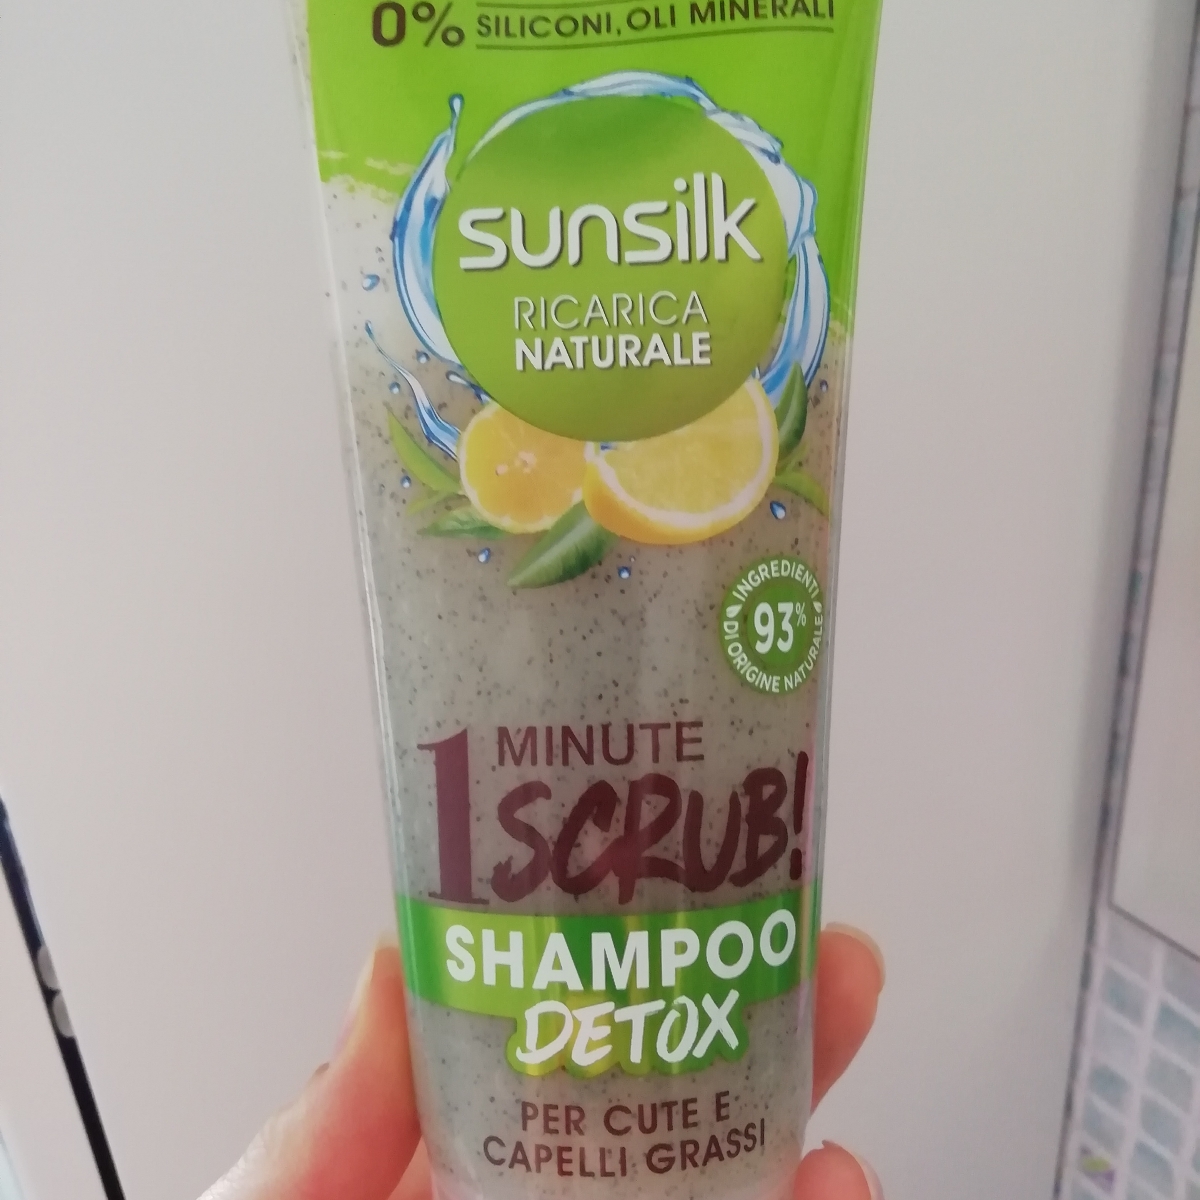 Sunsilk 1 Minute Scrub Shampoo Detox Per Cute e Capelli Grassi Review |  abillion